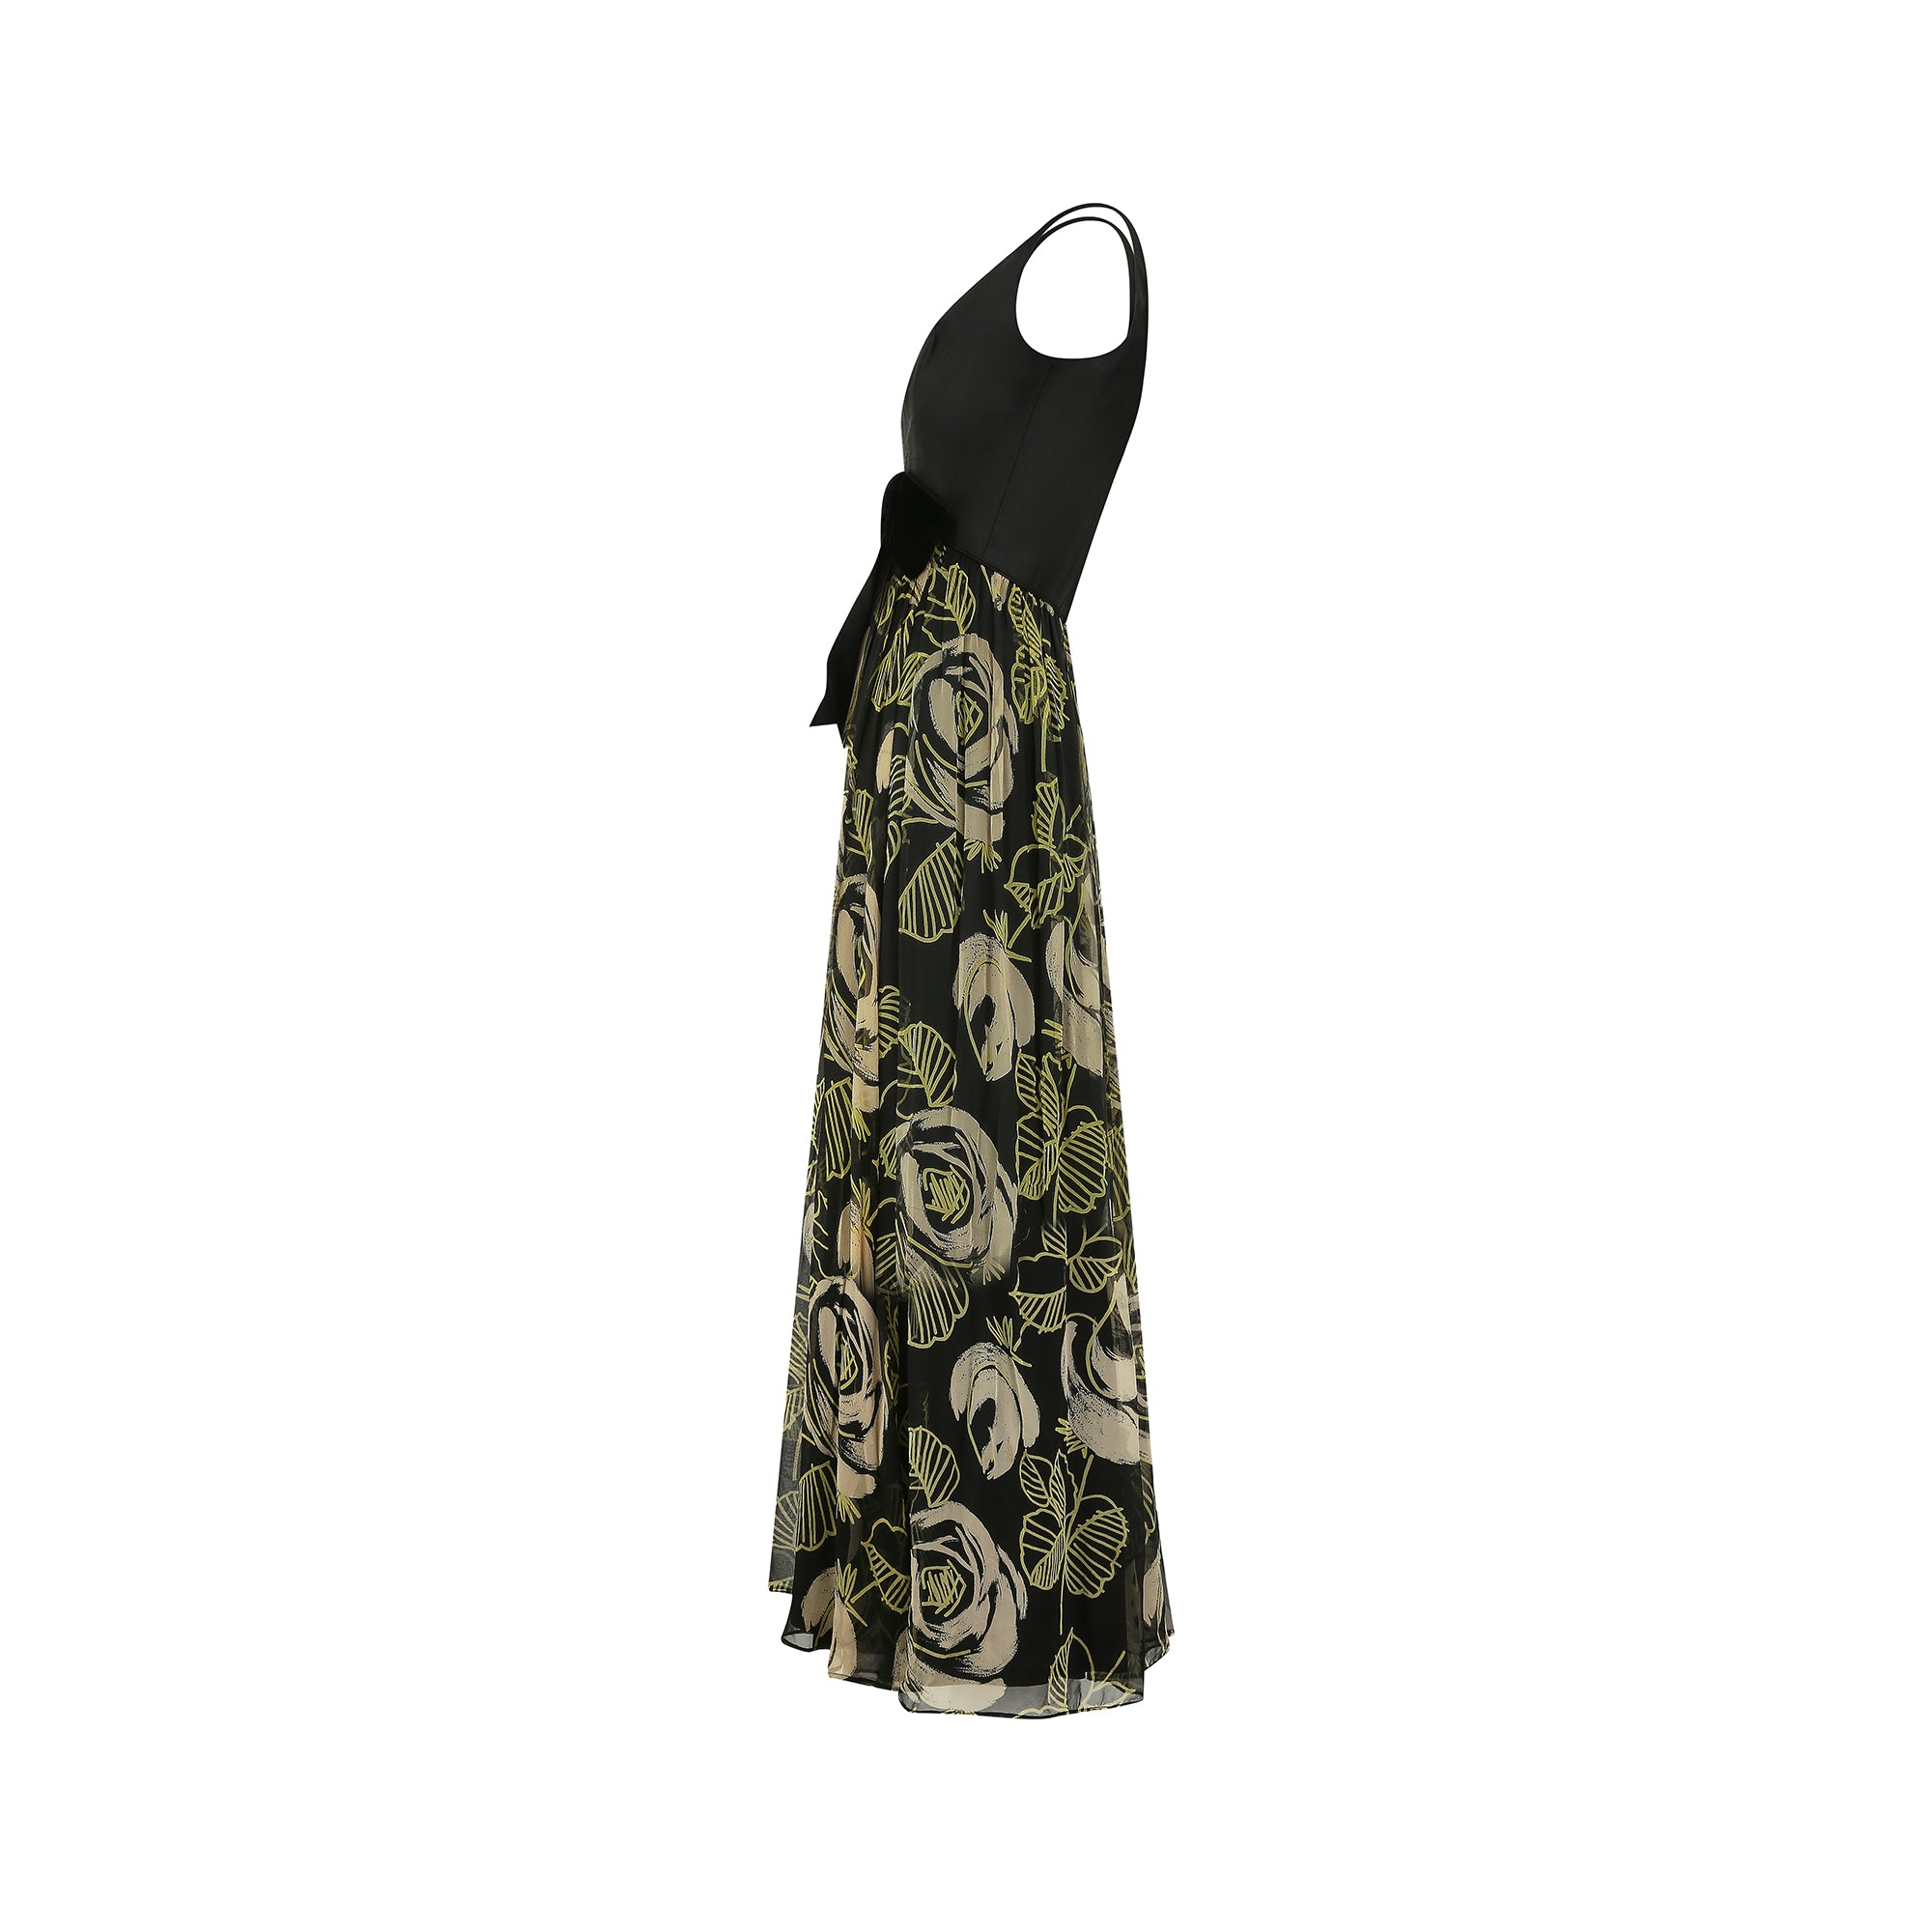 1960s Saks Fifth Avenue Chiffon Rose Print Maxi Dress